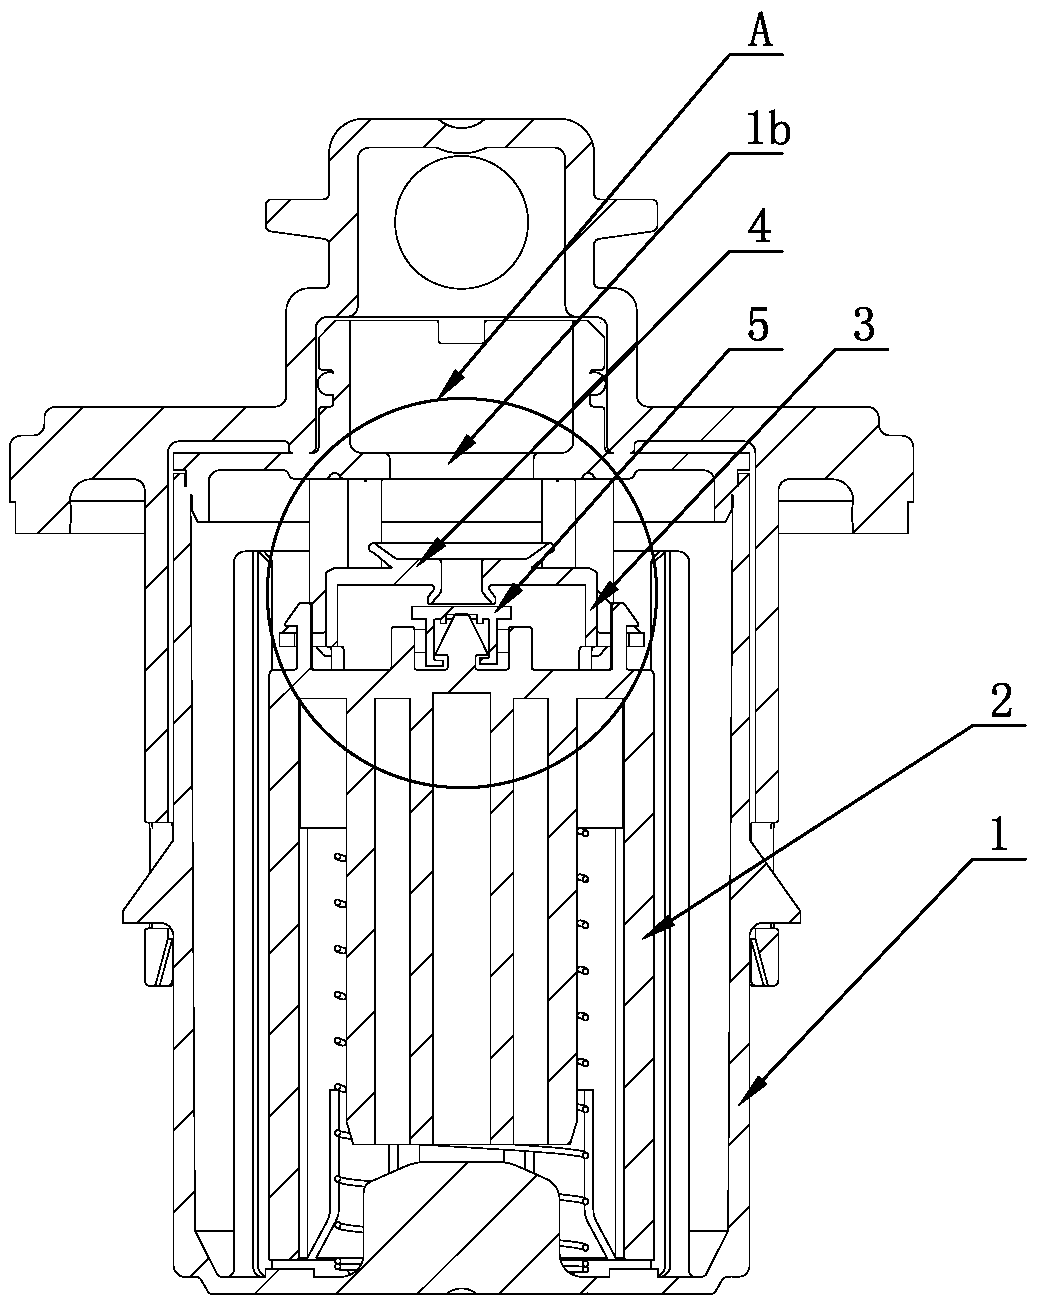 Fuel tank control valve